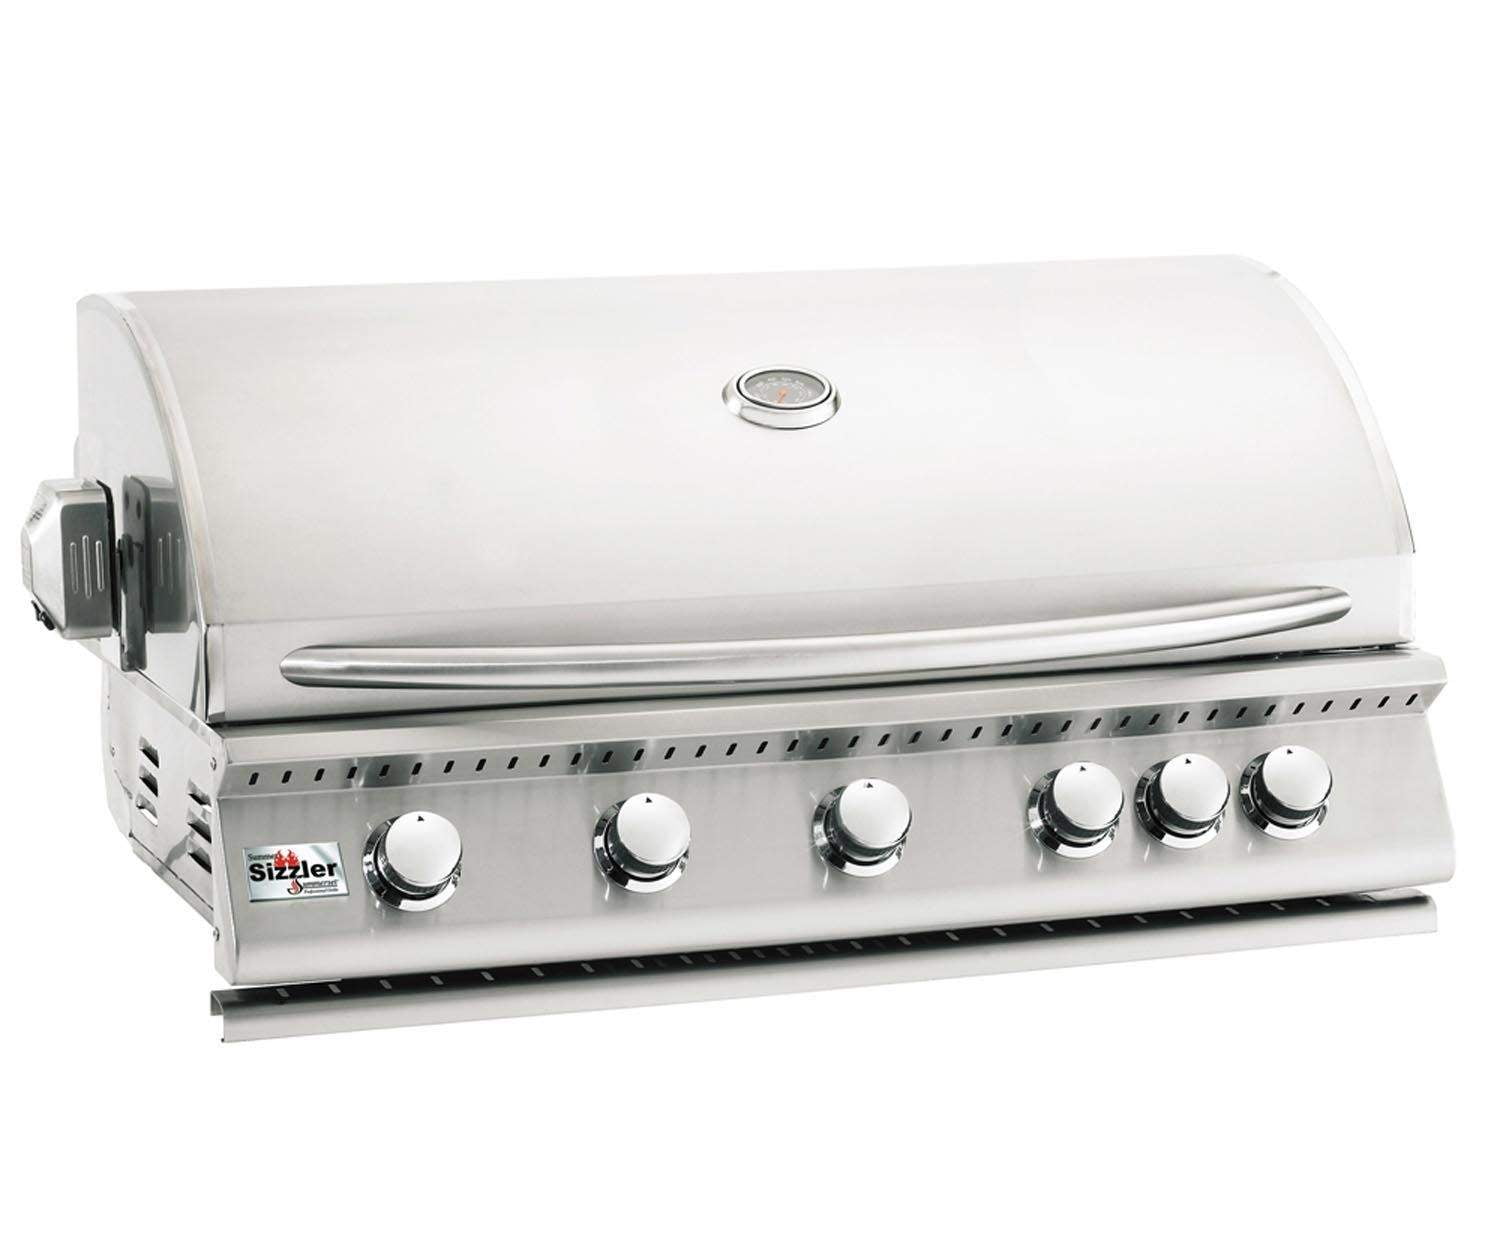 Summerset Grills Built-In/Countertop Propane Gas Stainless Steel Outdoor  Pizza Oven - SS-OVBI-LP